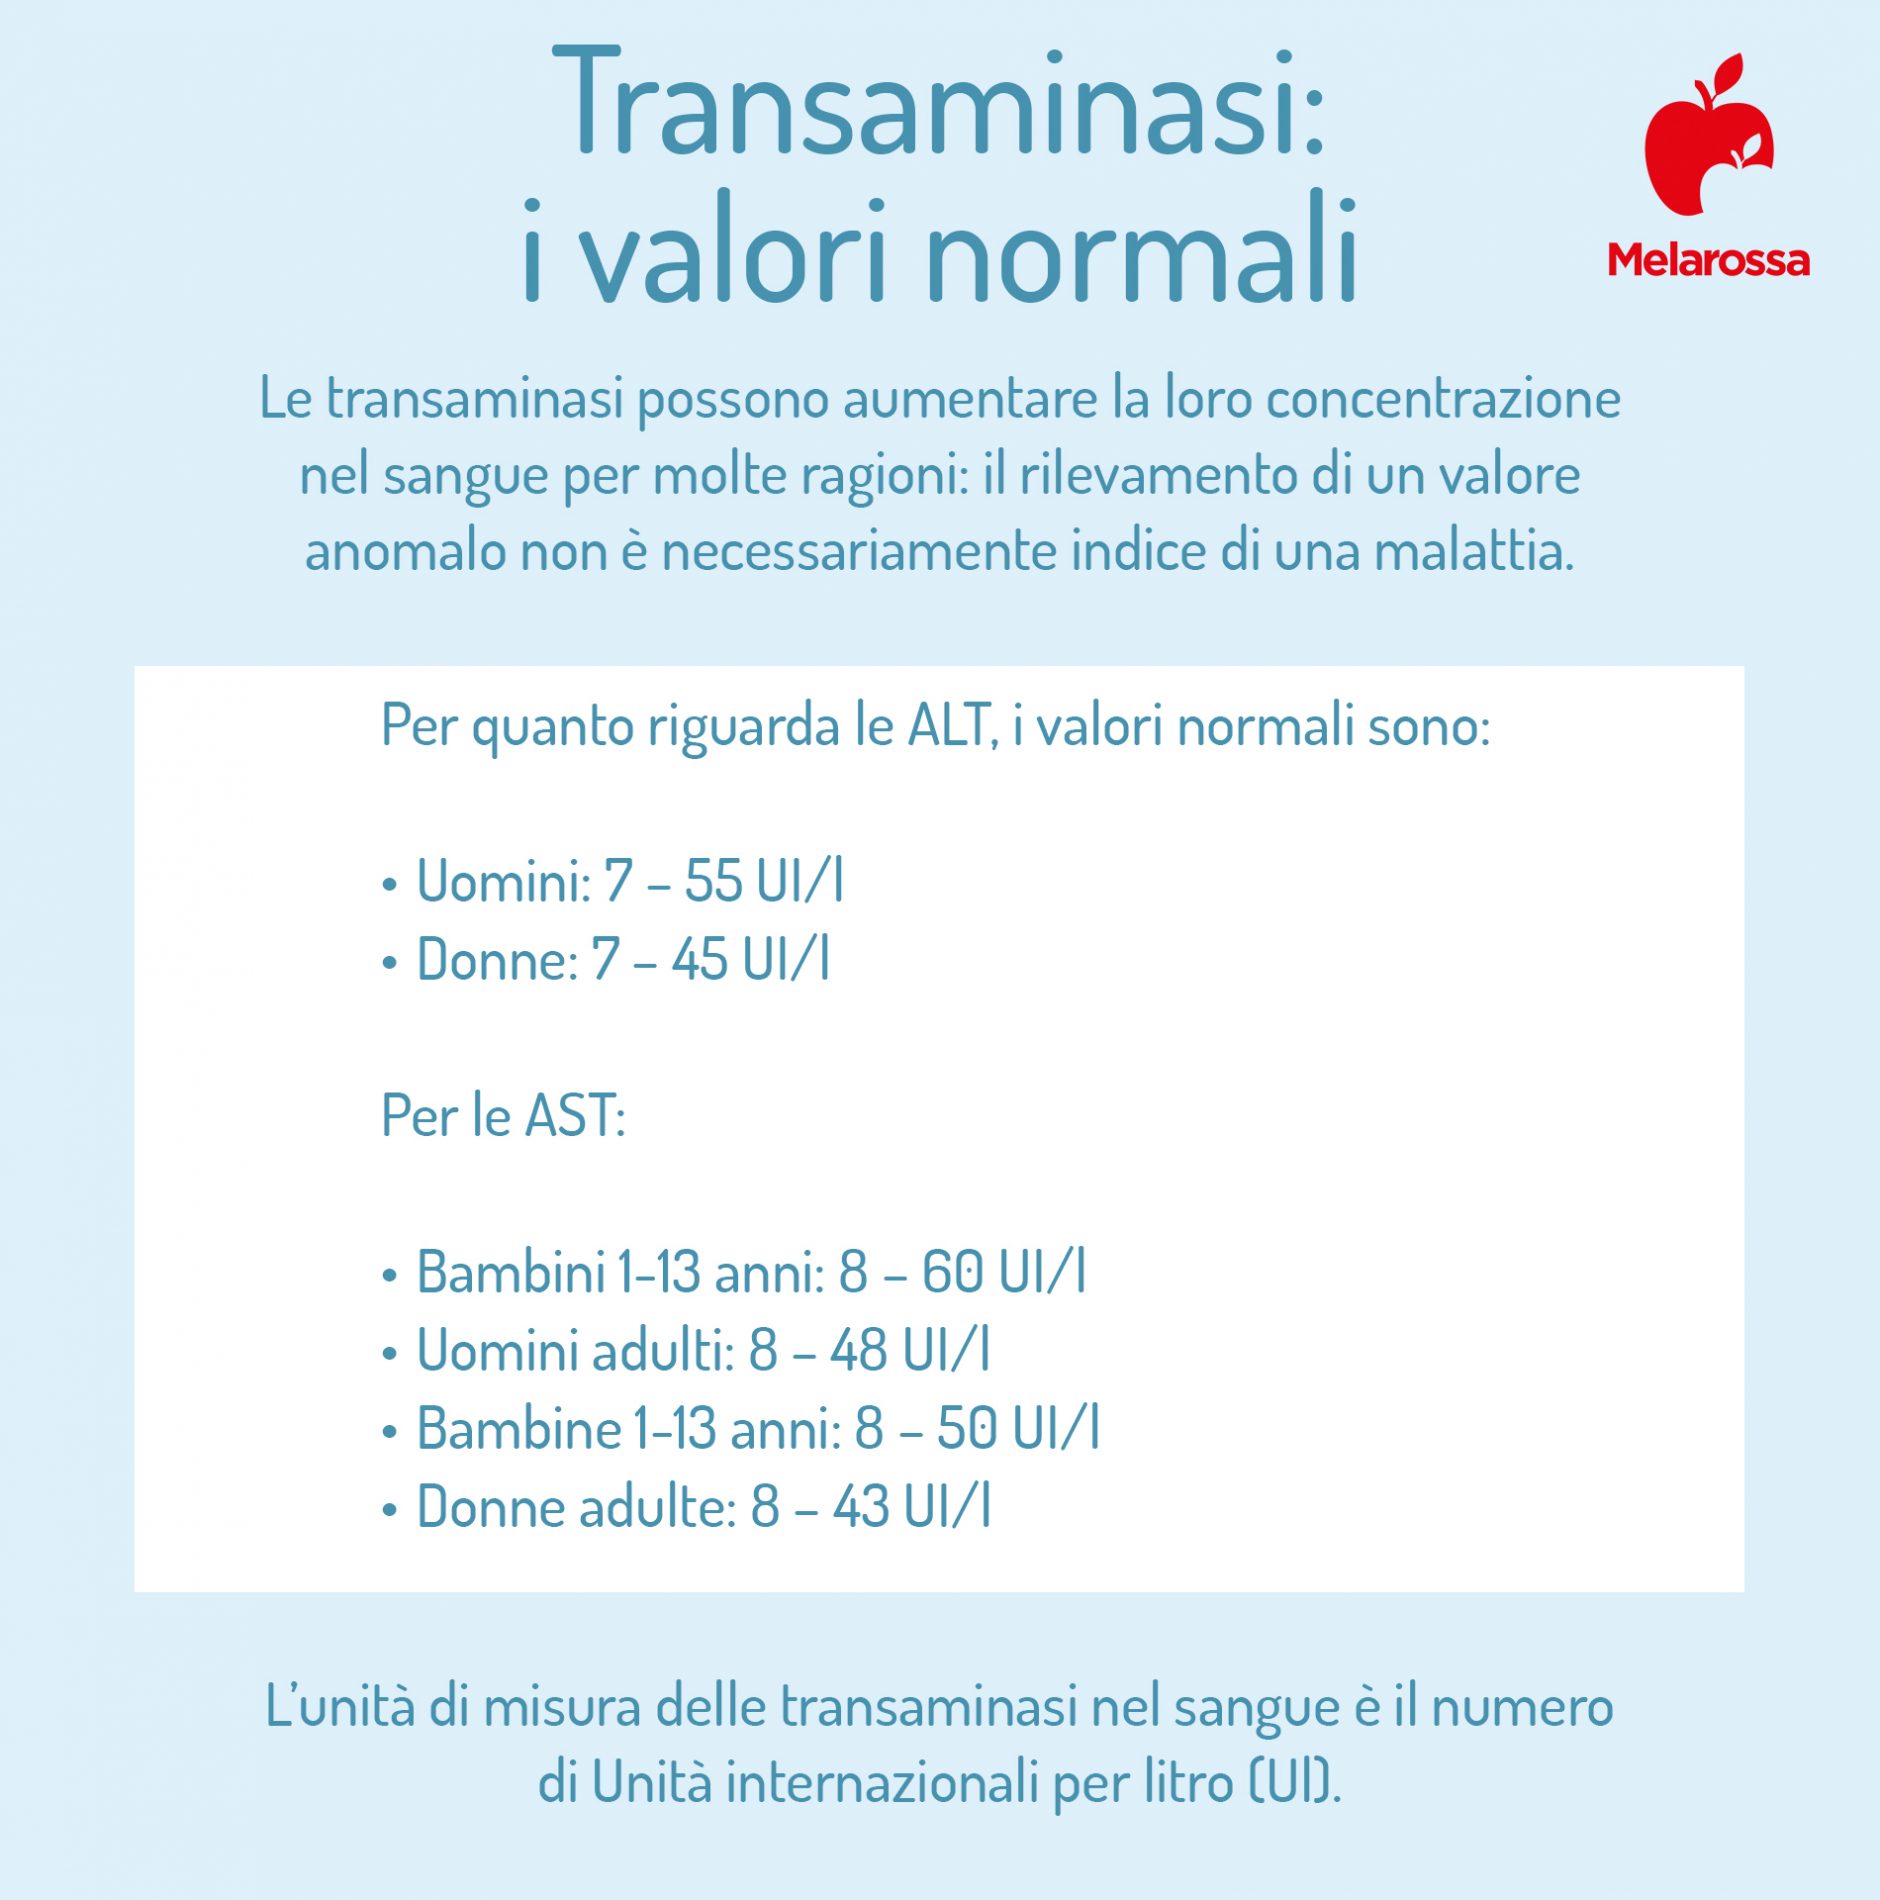 transaminasi: tabella dei valori normali 